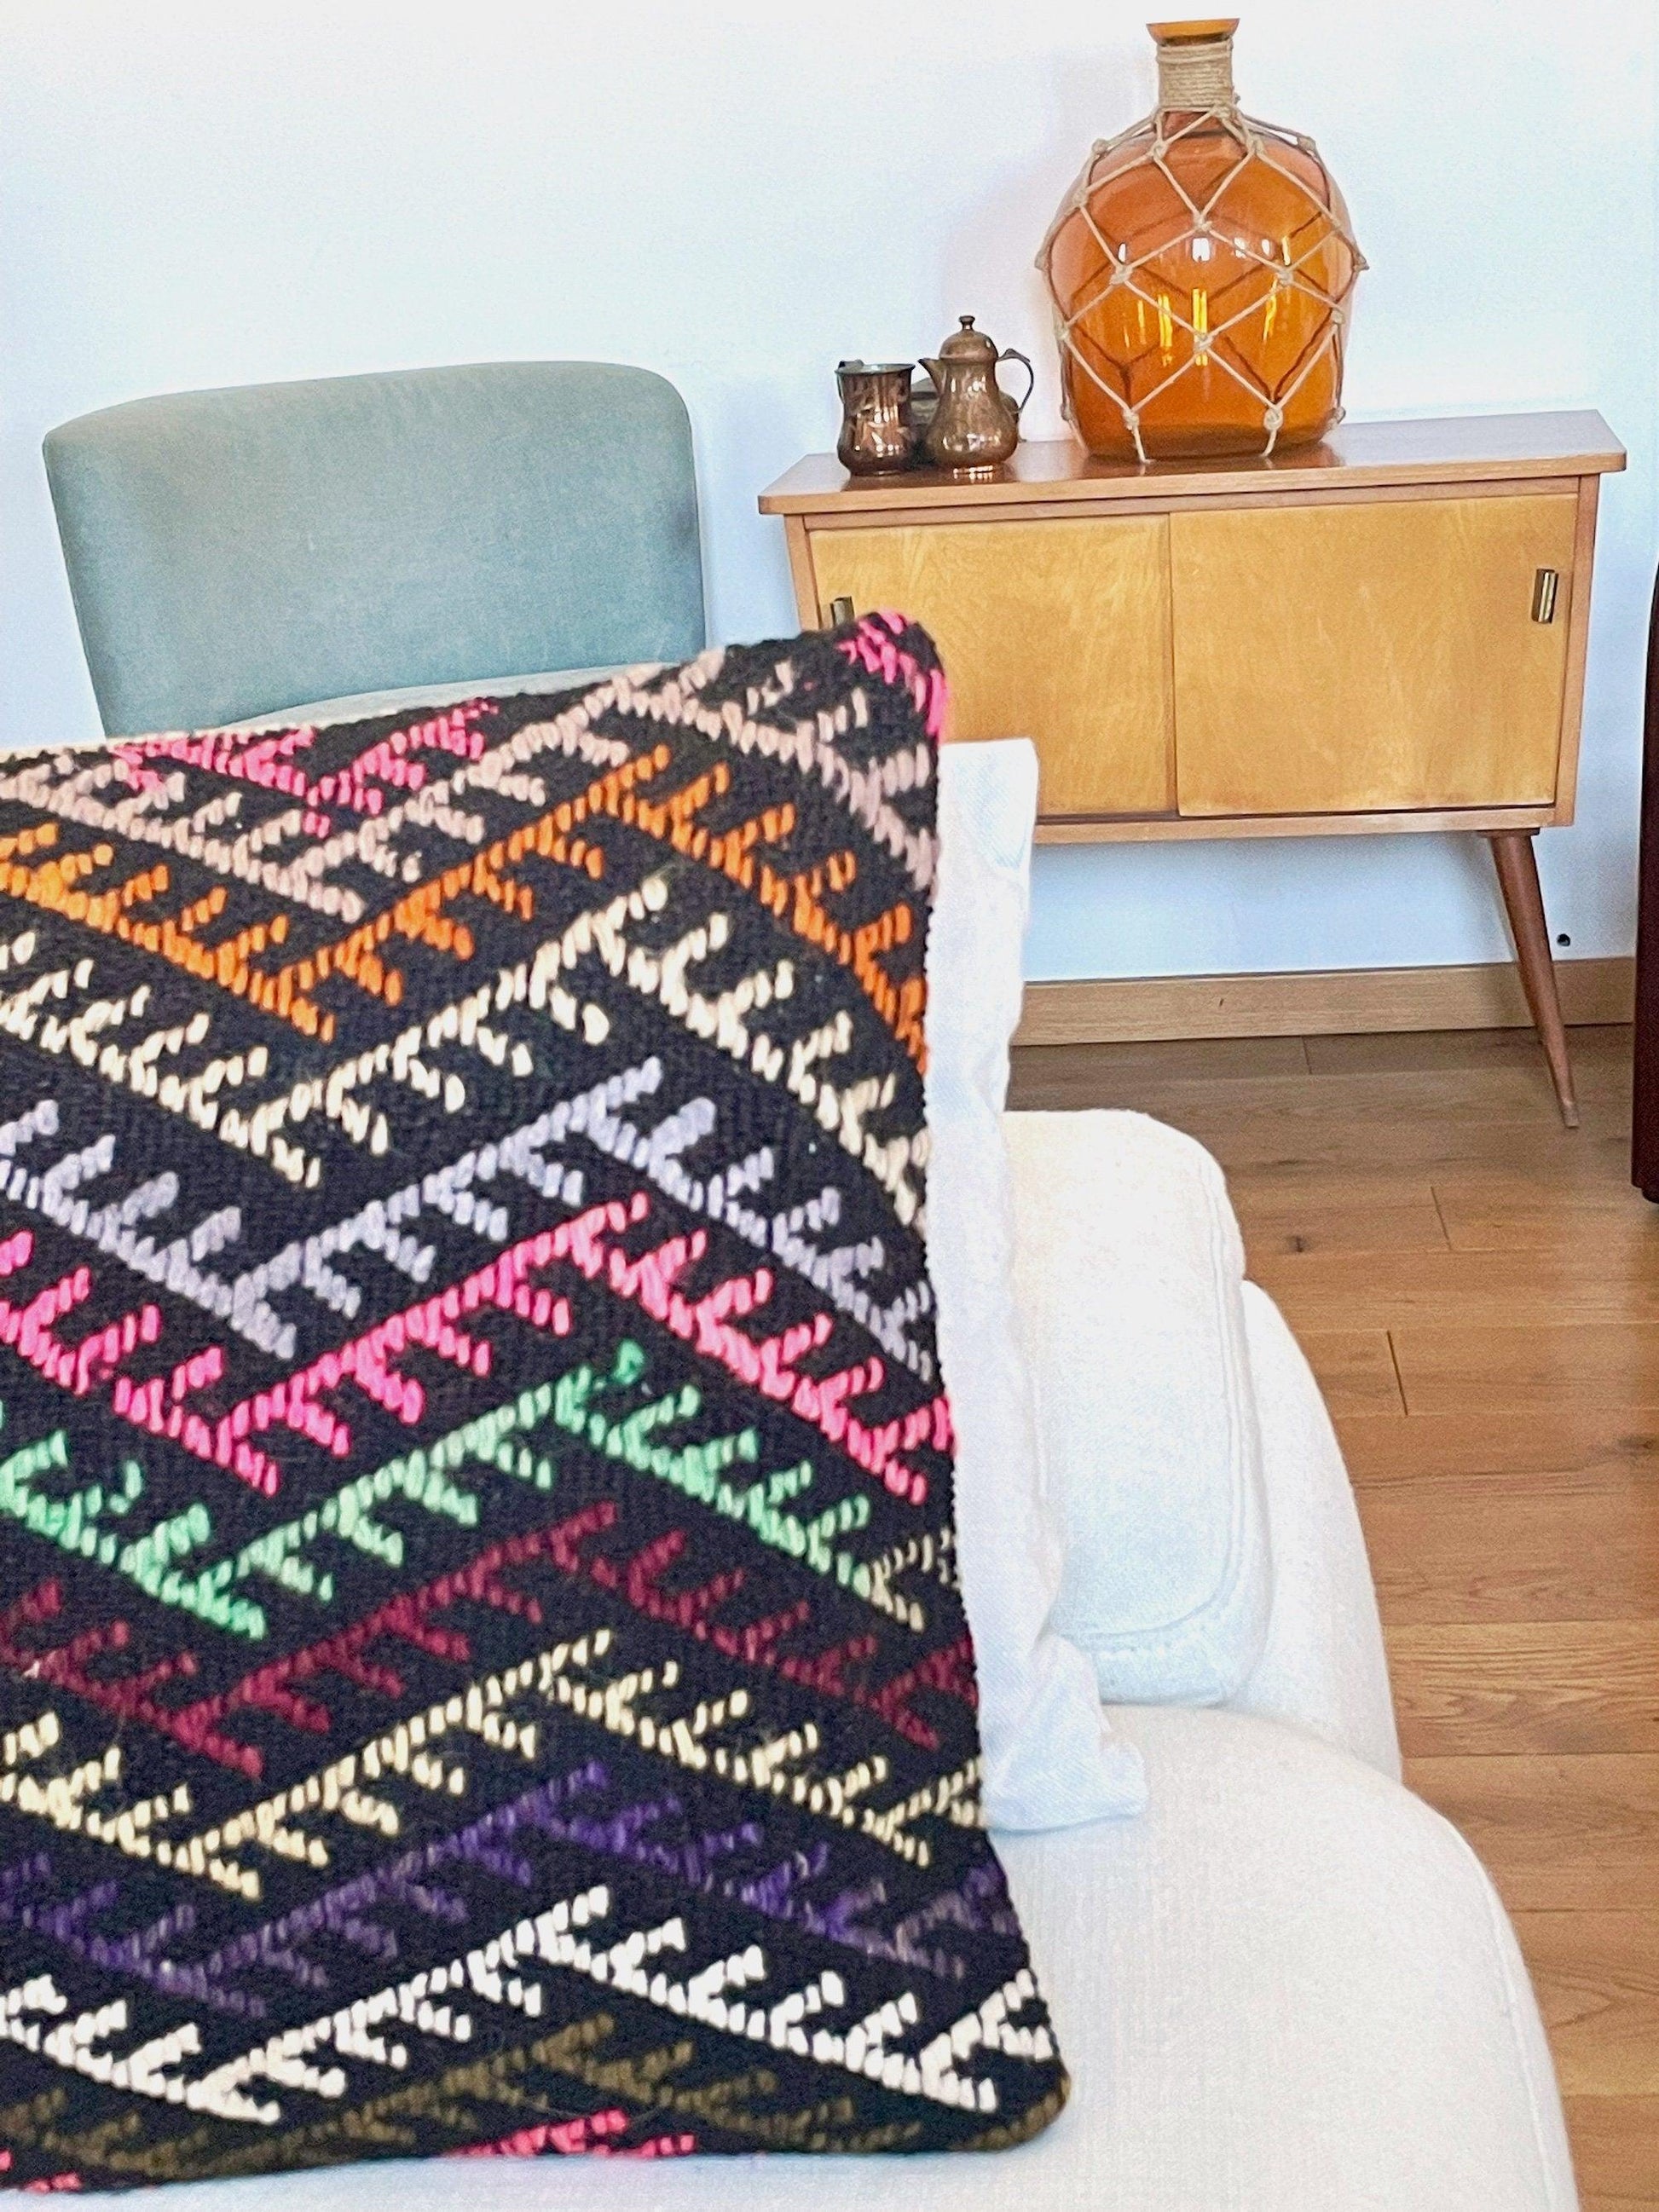 XL Vintage Kilim Bench Cushion handwoven with natural yarnThrow PillowsBeachPerfect.de